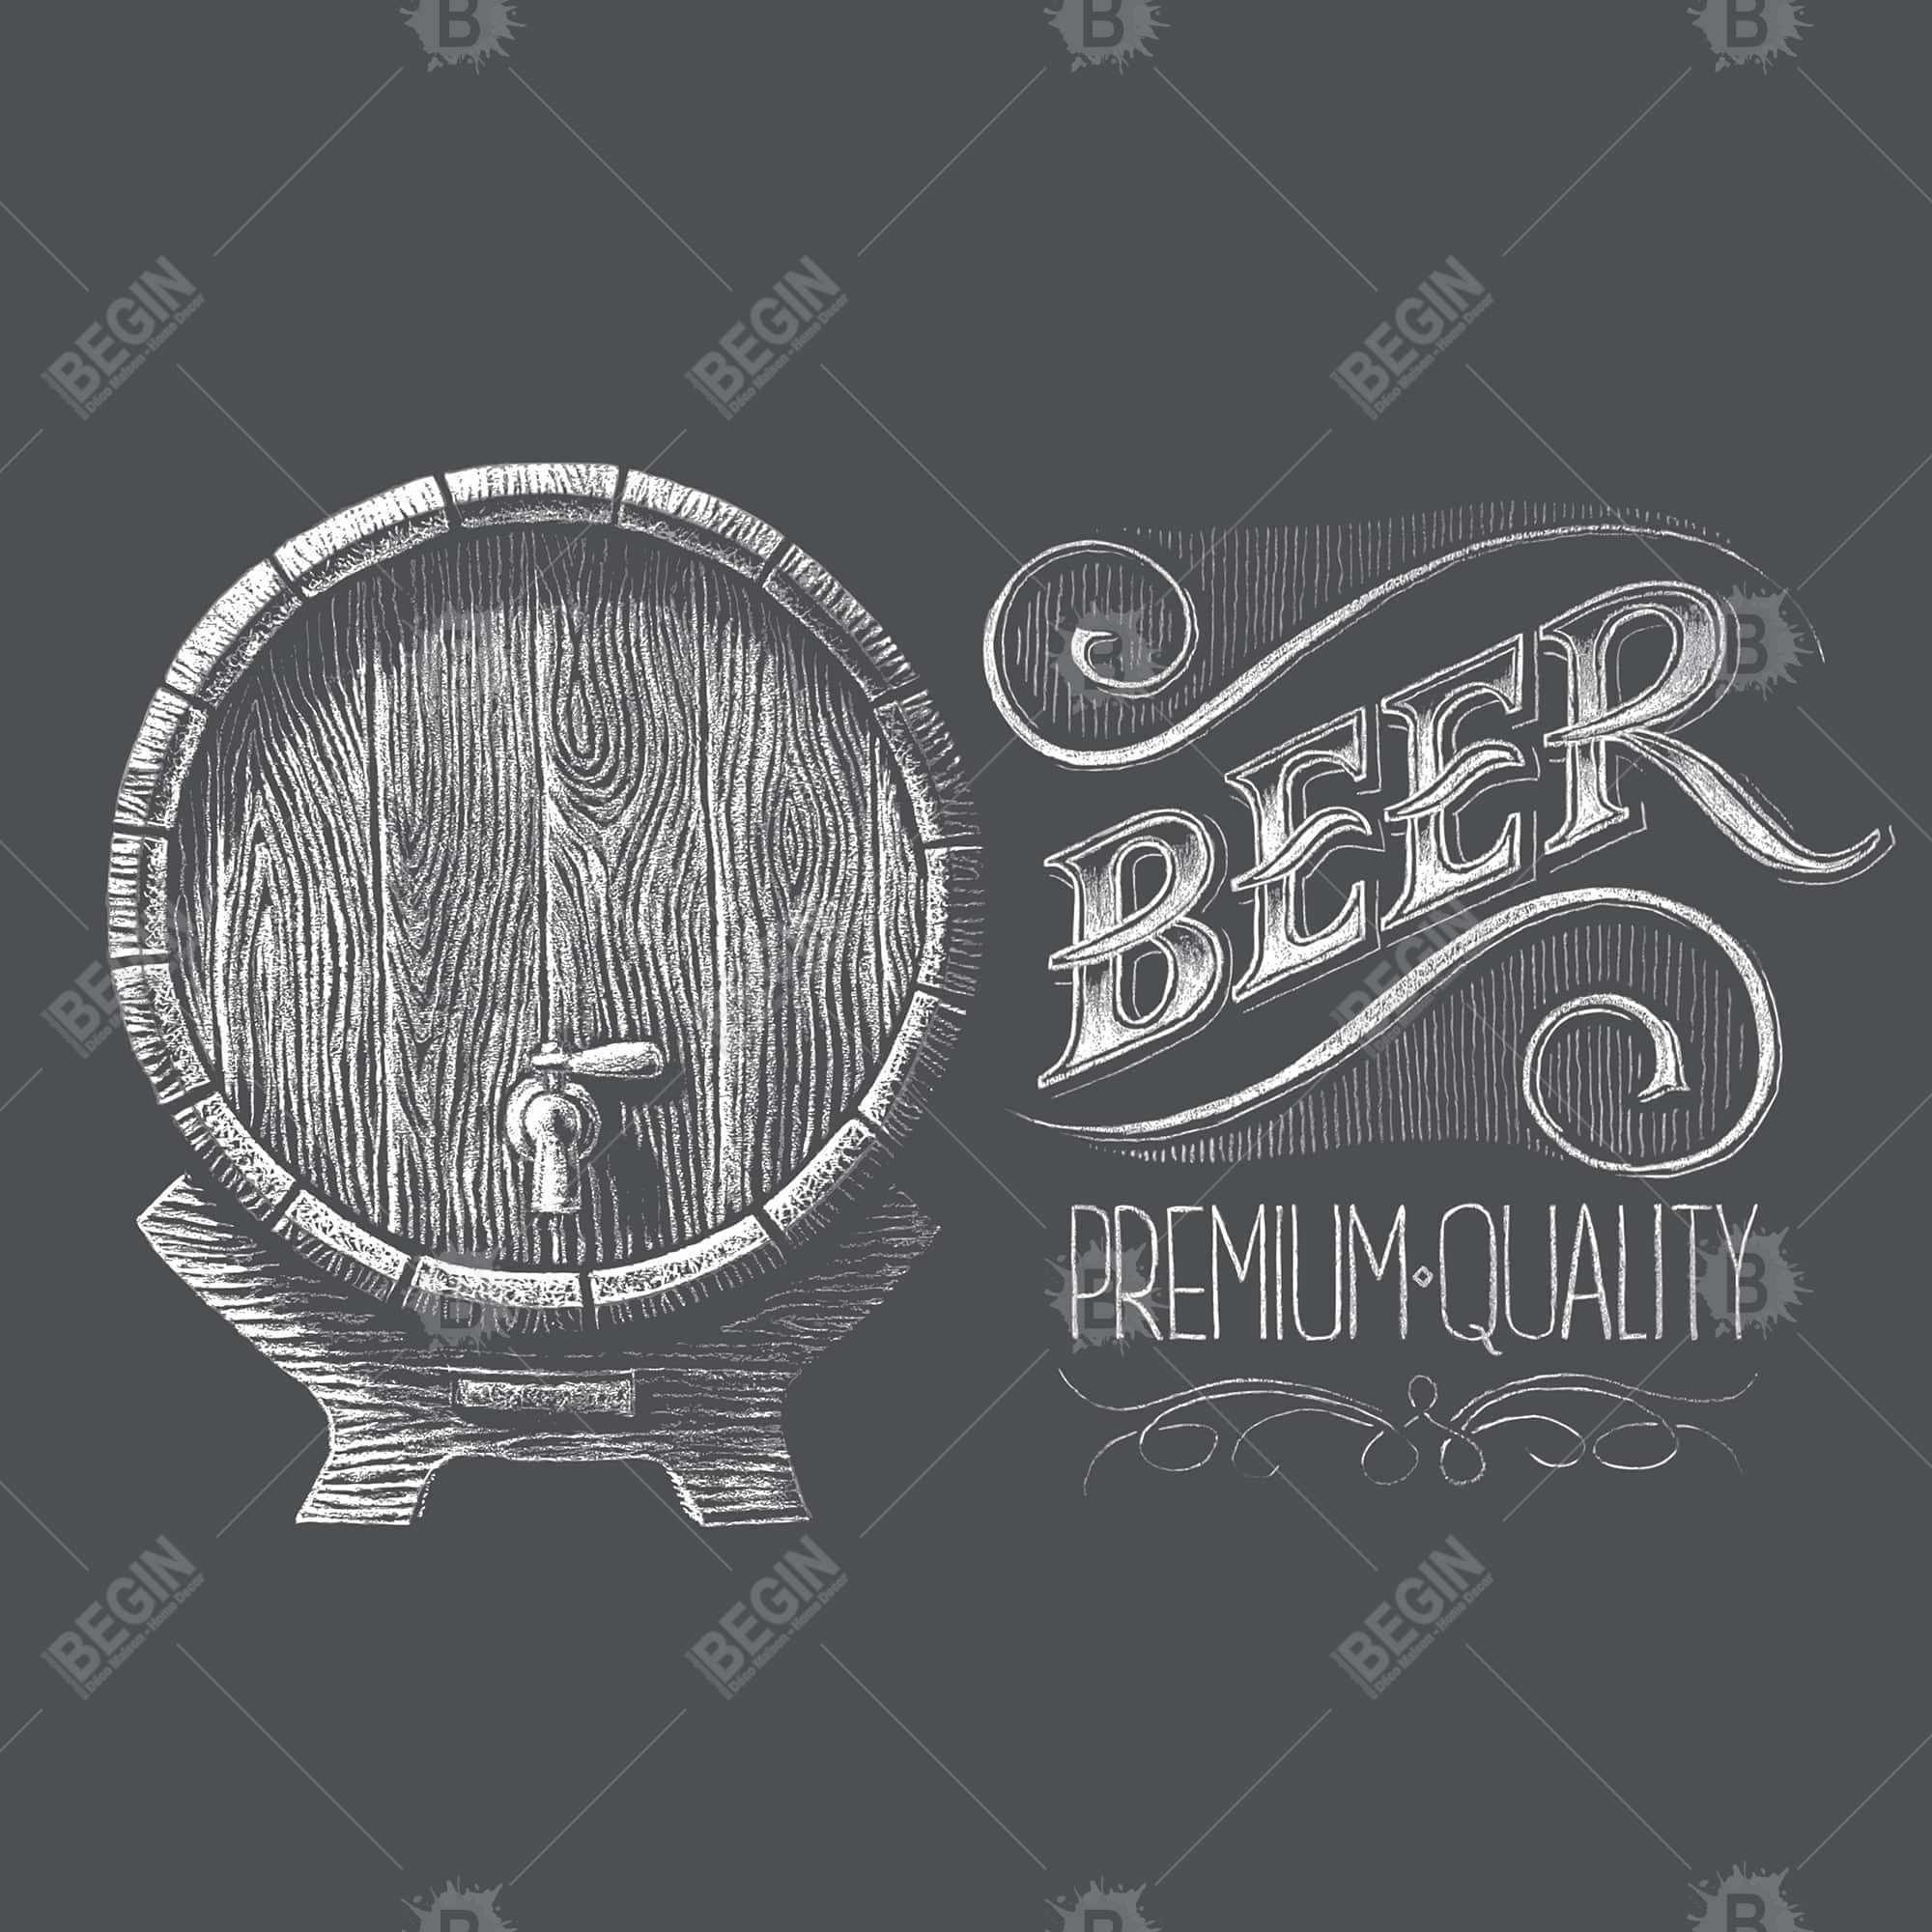 Old beer sign